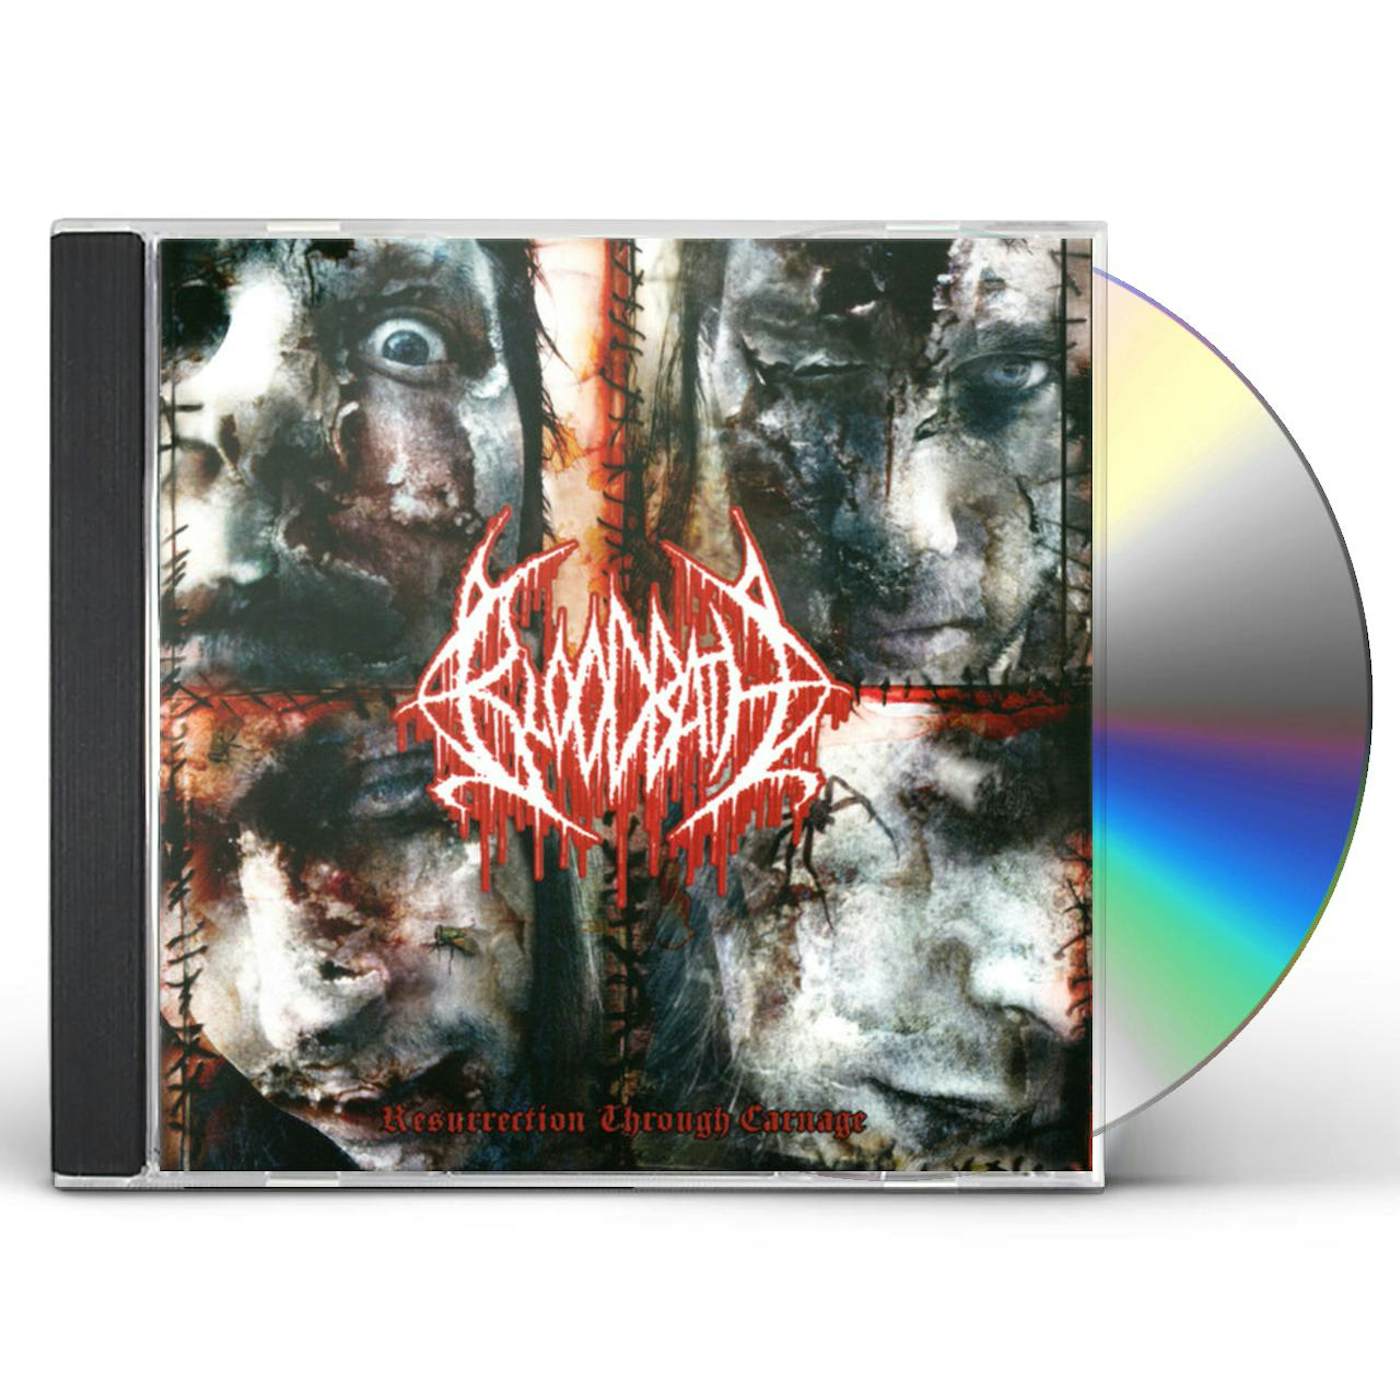 Bloodbath RESURRECTION THROUGH CARNAGE CD